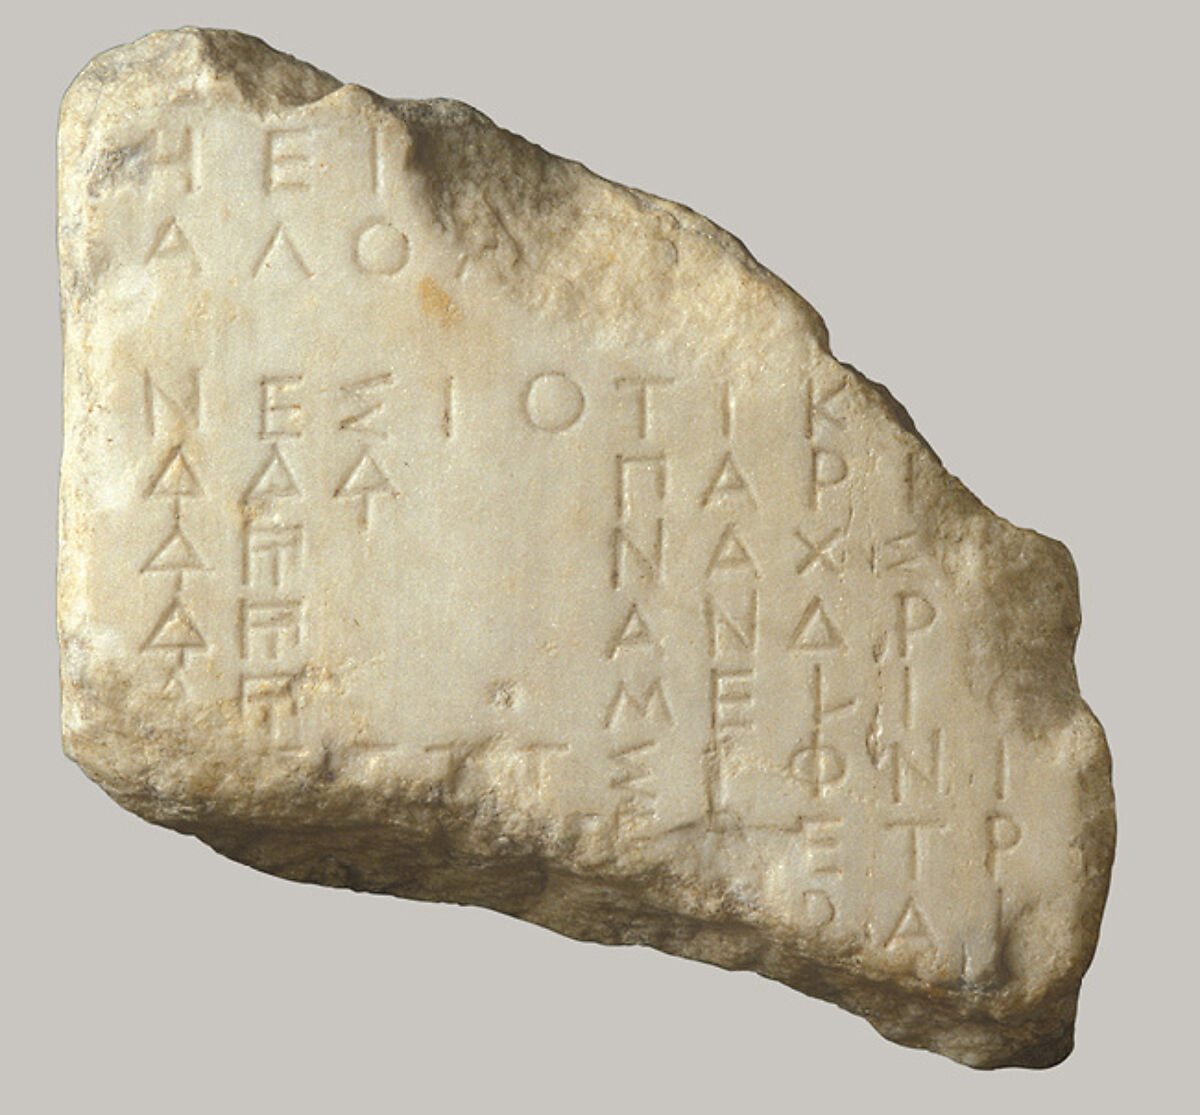 Fragmentary marble inscription